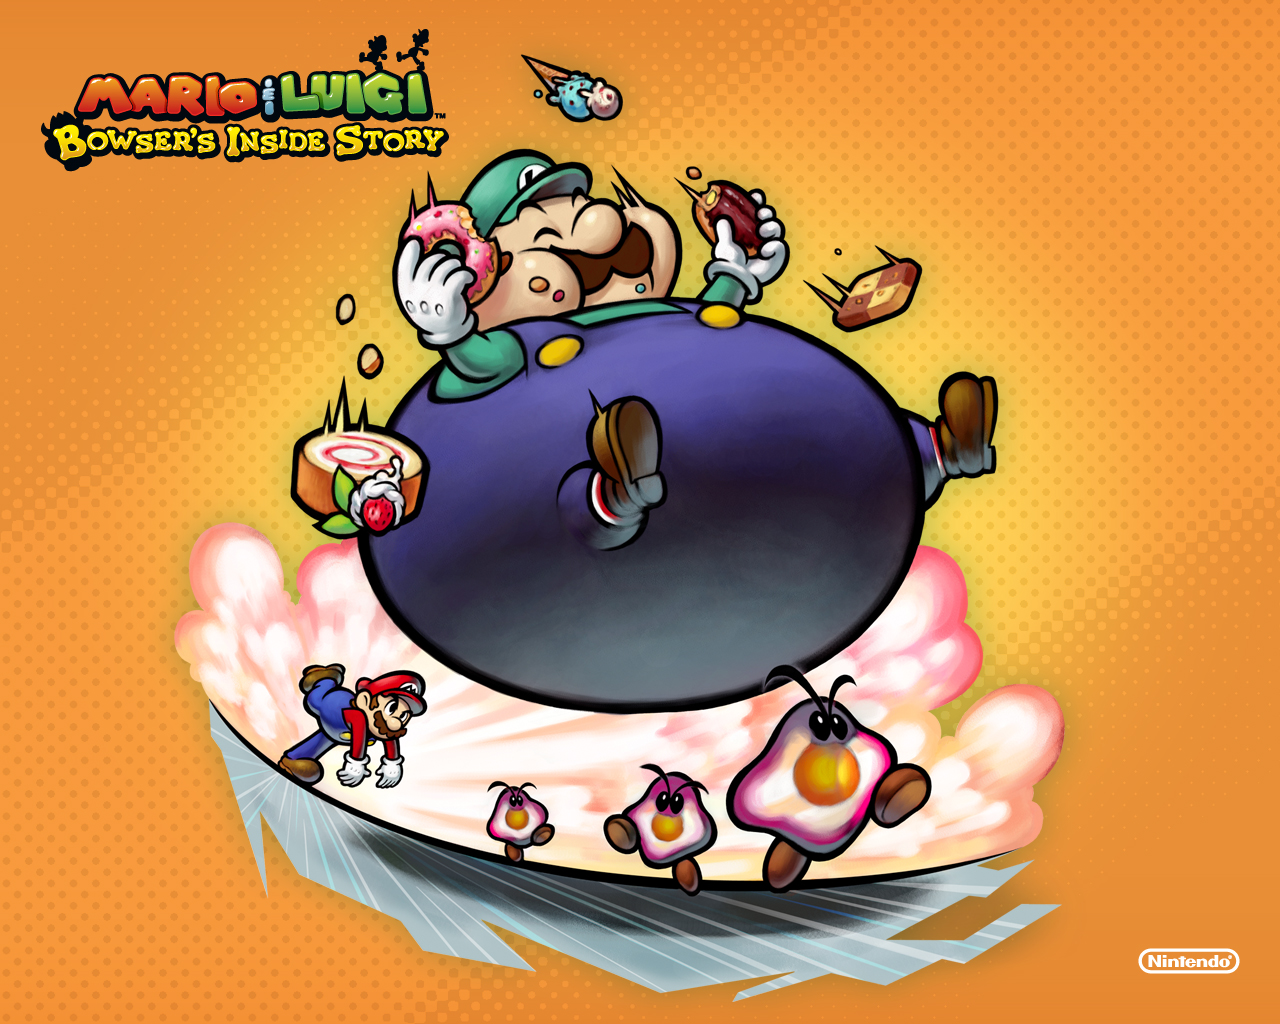 Mario & Luigi: Bowser's Inside Story - Wikipedia